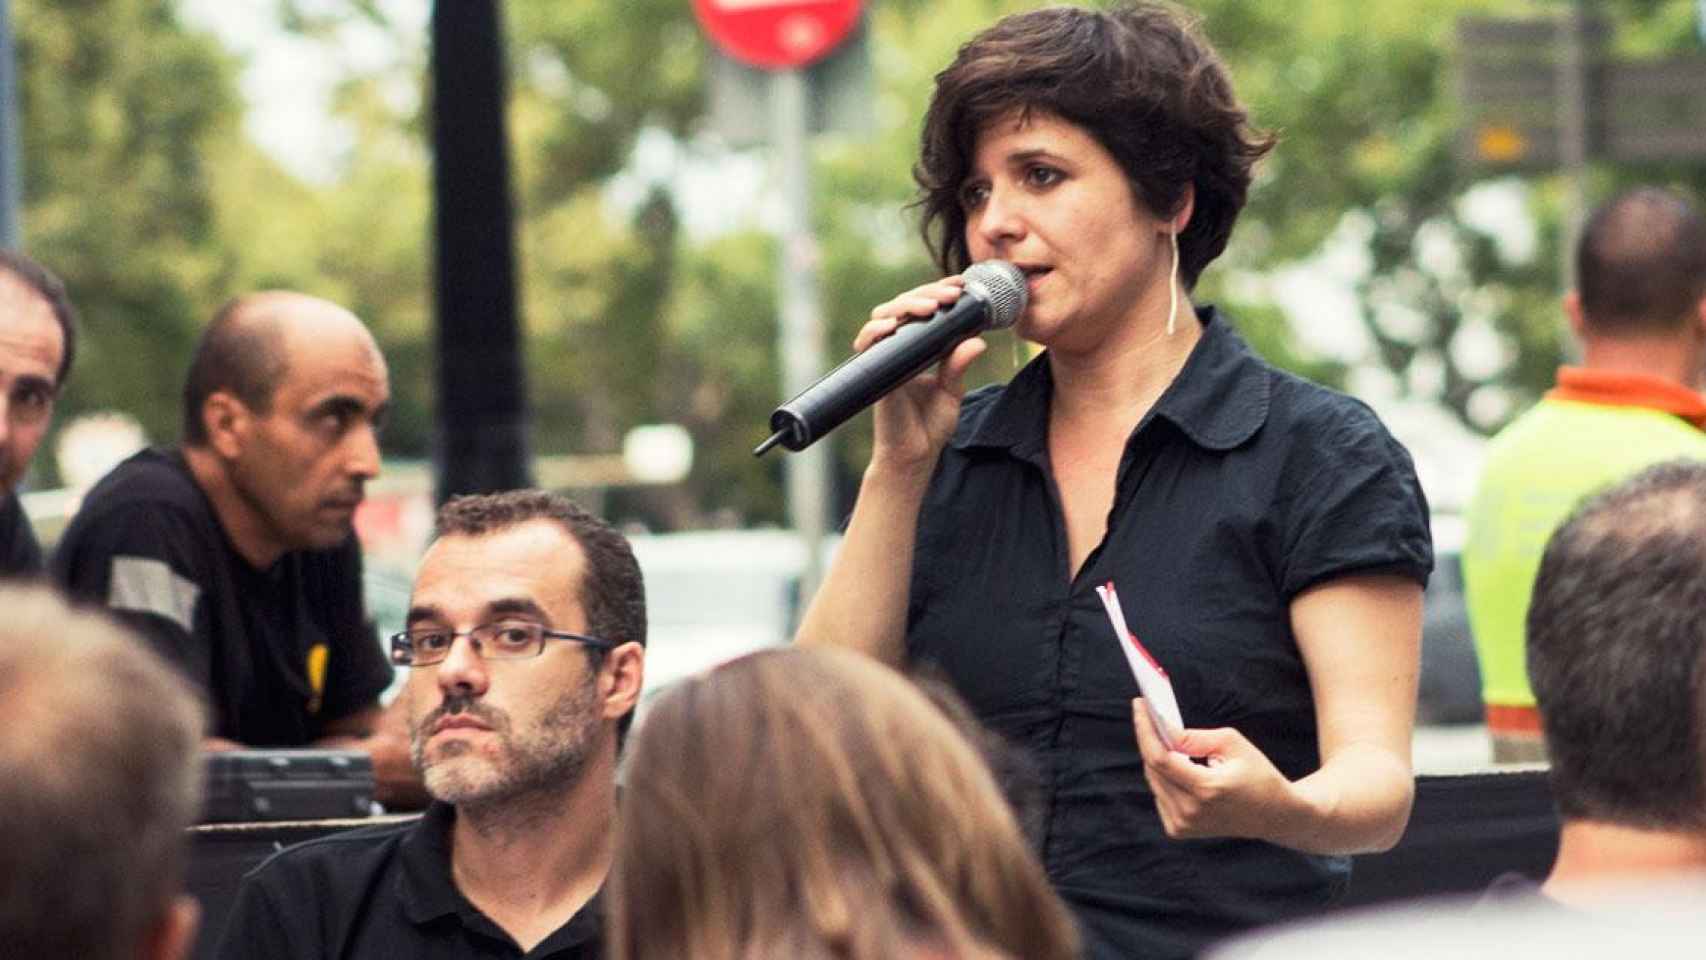 Gala Pin, exconcejal de Barcelona en Comú, durante un acto de partido / CC